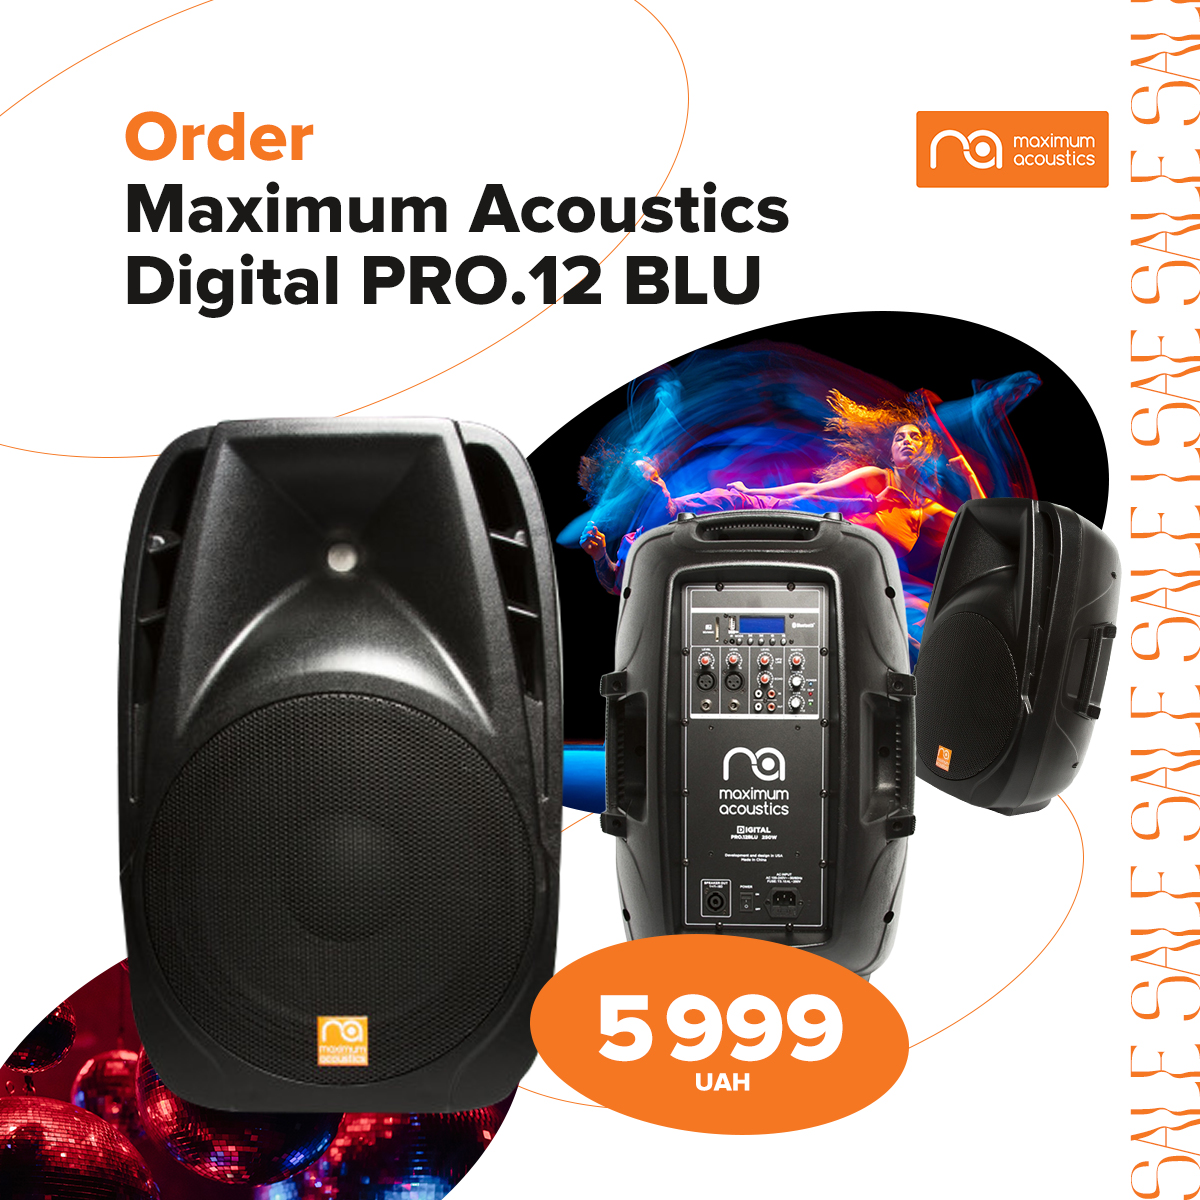 Buy the Digital PRO.12 BLU speaker system at a promotional price of 5999 UAH